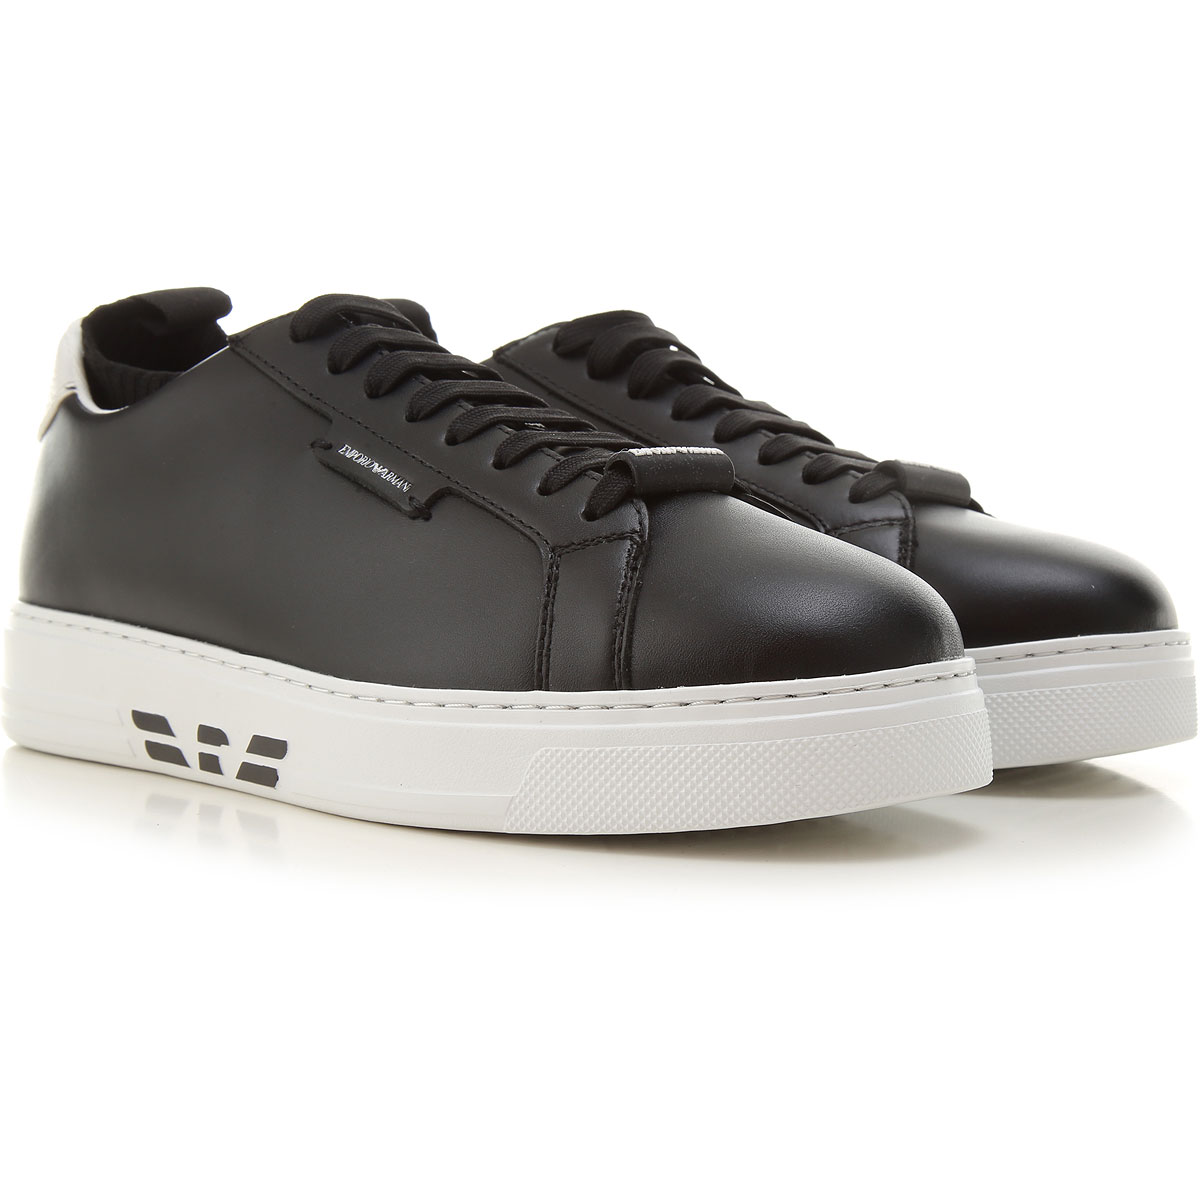 Mens Shoes Emporio Armani, Style code: x4x308-xm709-n523